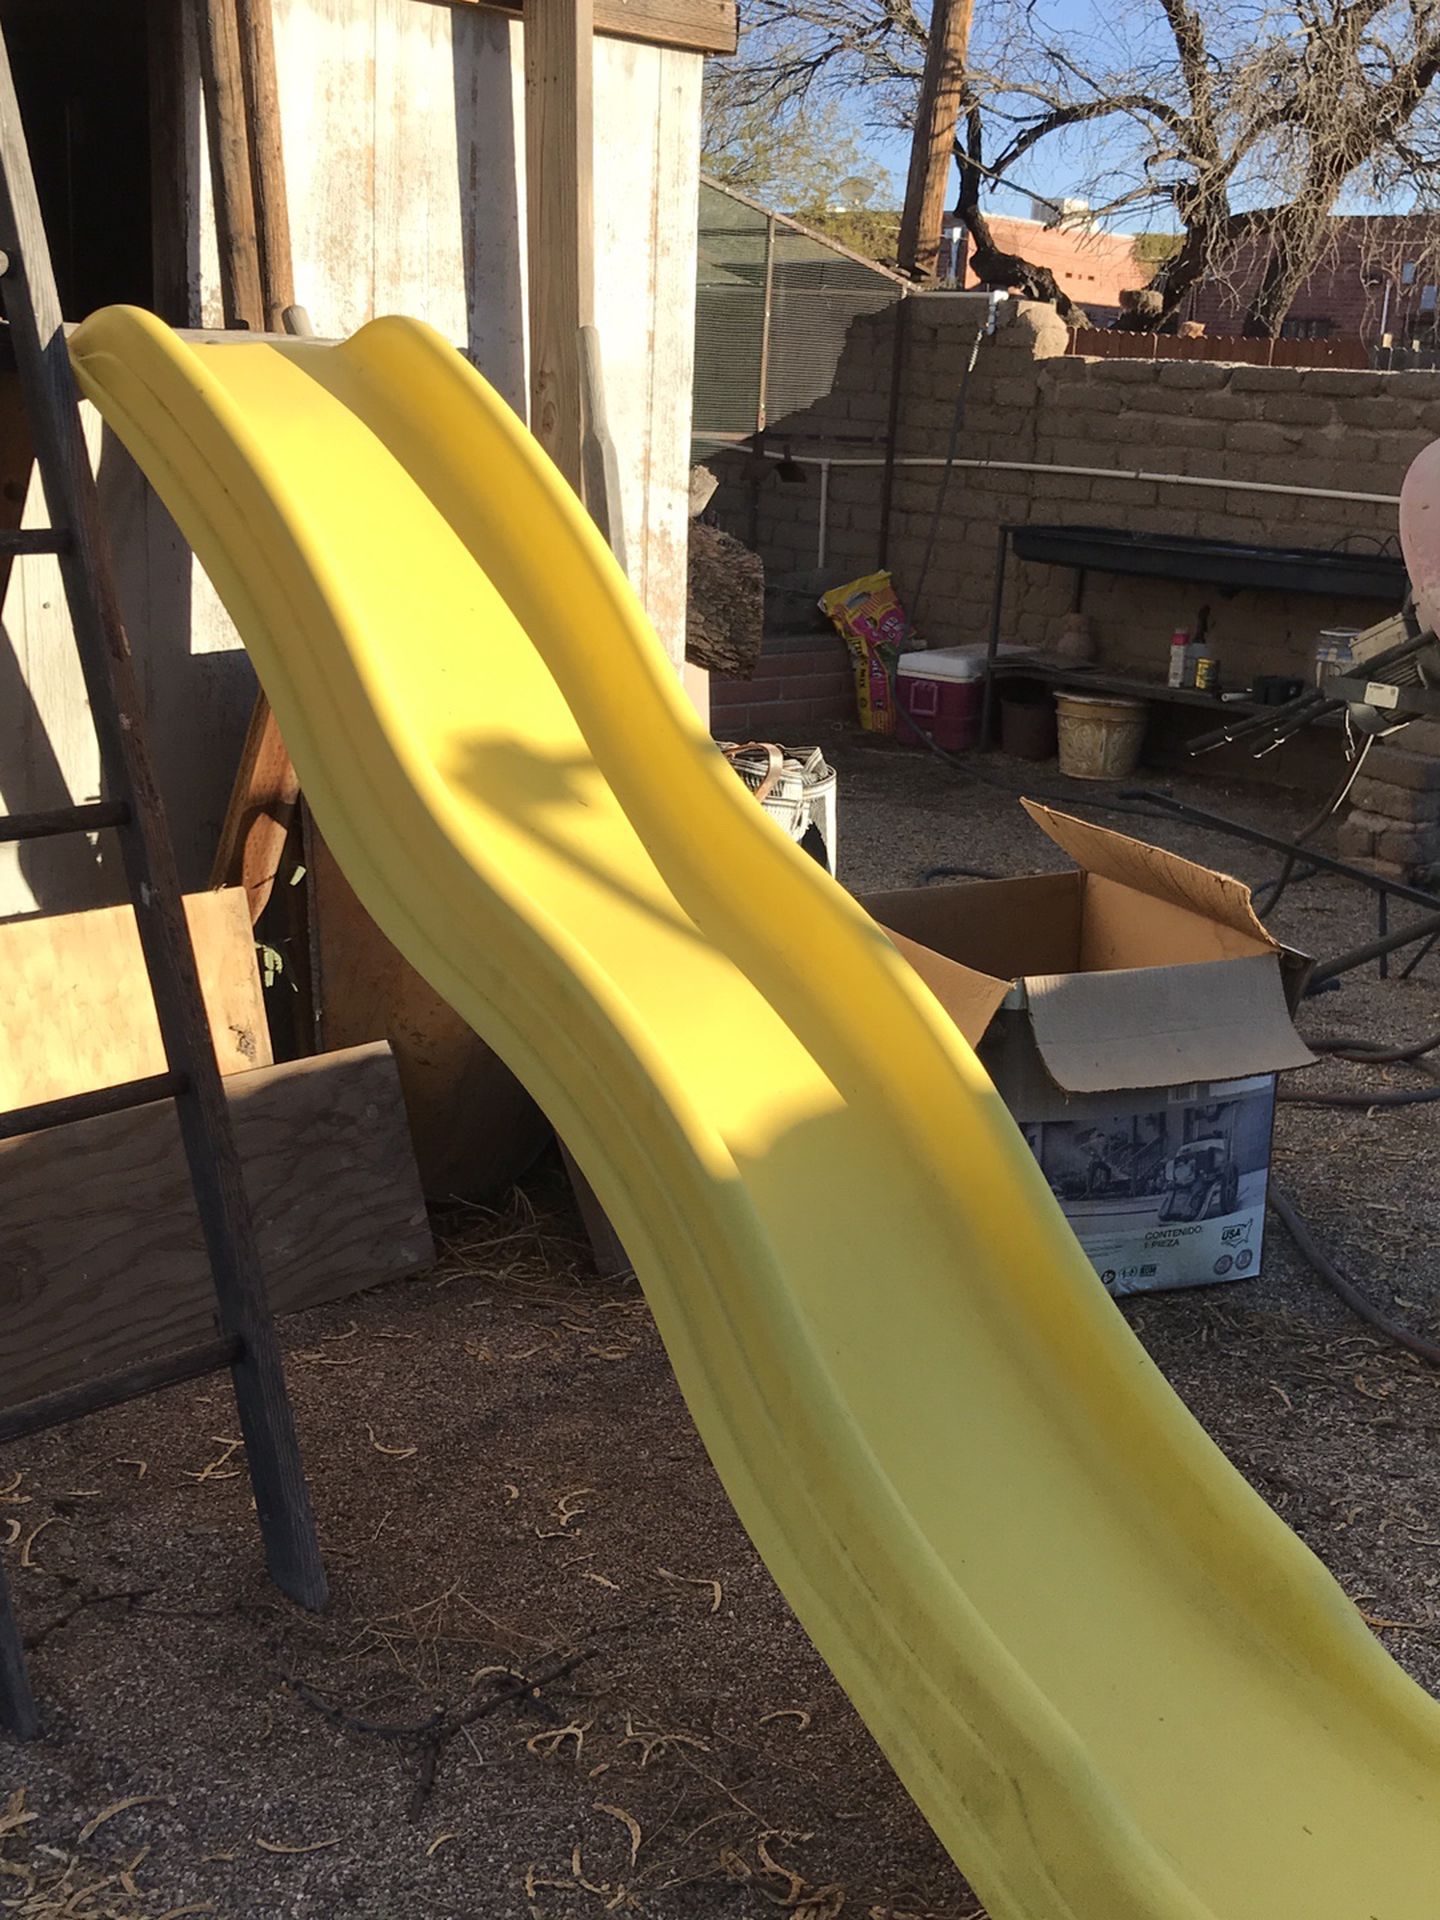 Free yellow slide